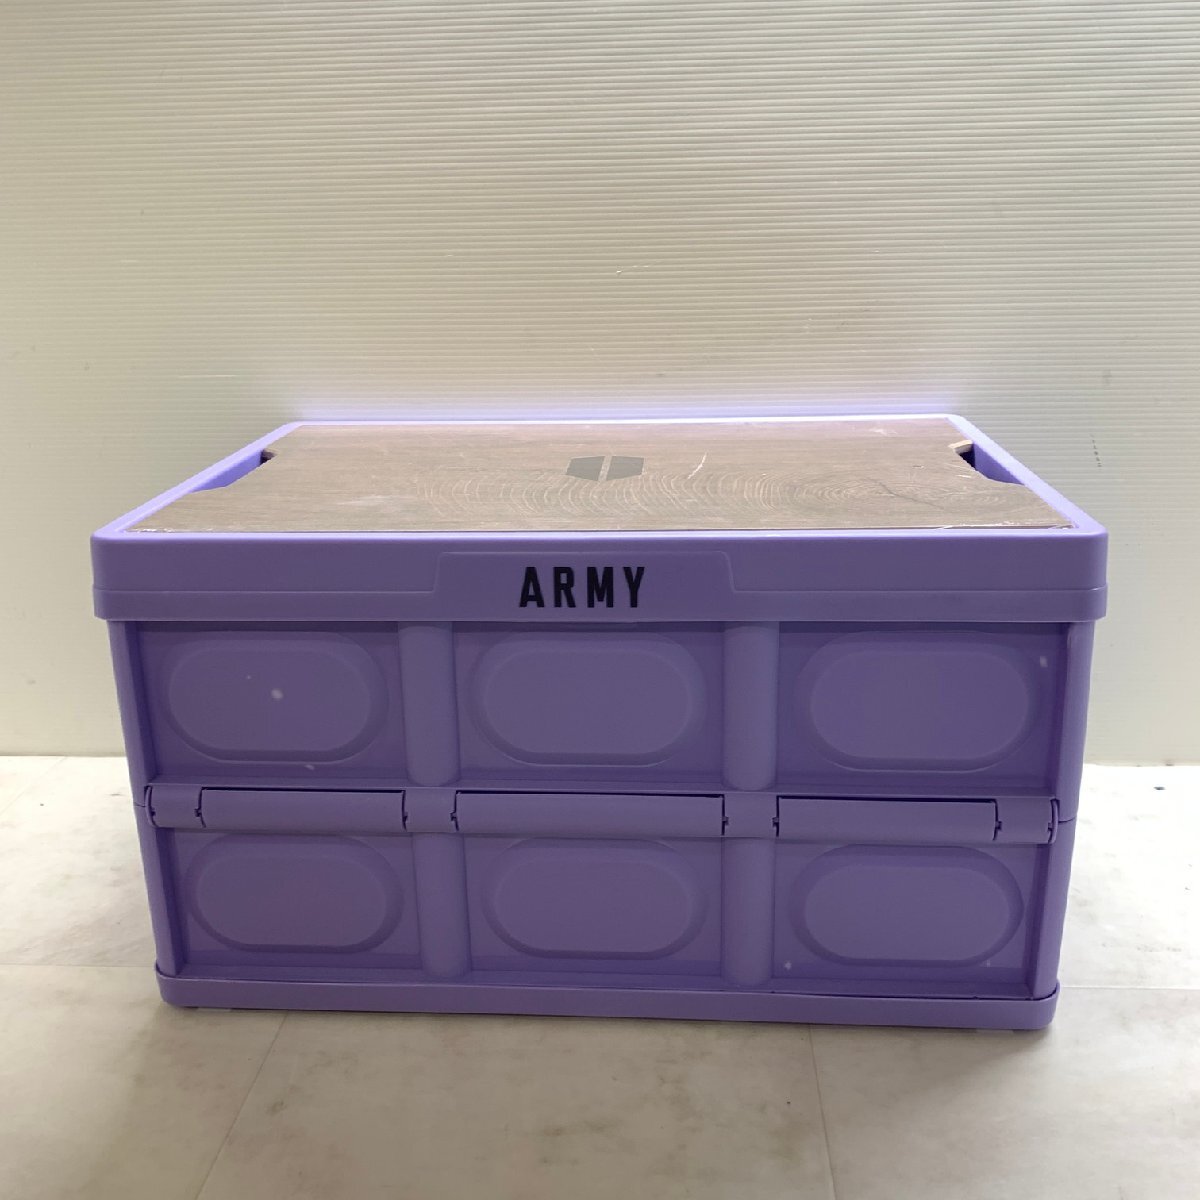 MIN[ текущее состояние доставка товар ] BTS контейнер four tune box только K-POP (84-240507-ME-14-MIN)